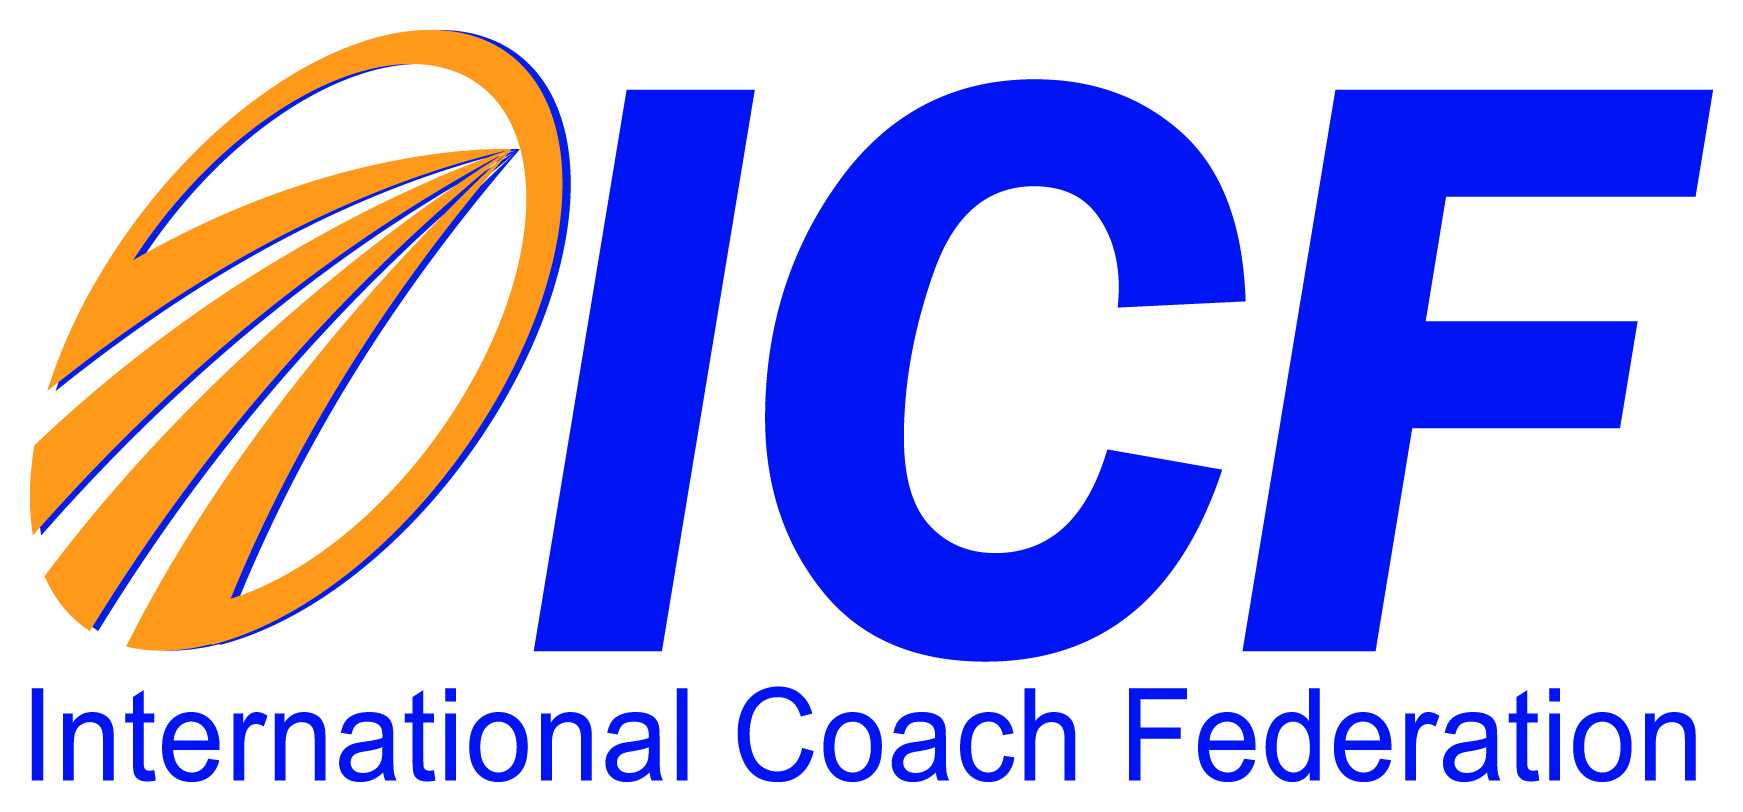 icf certification, icf certified, coach certification, coaching certification, international coach federation